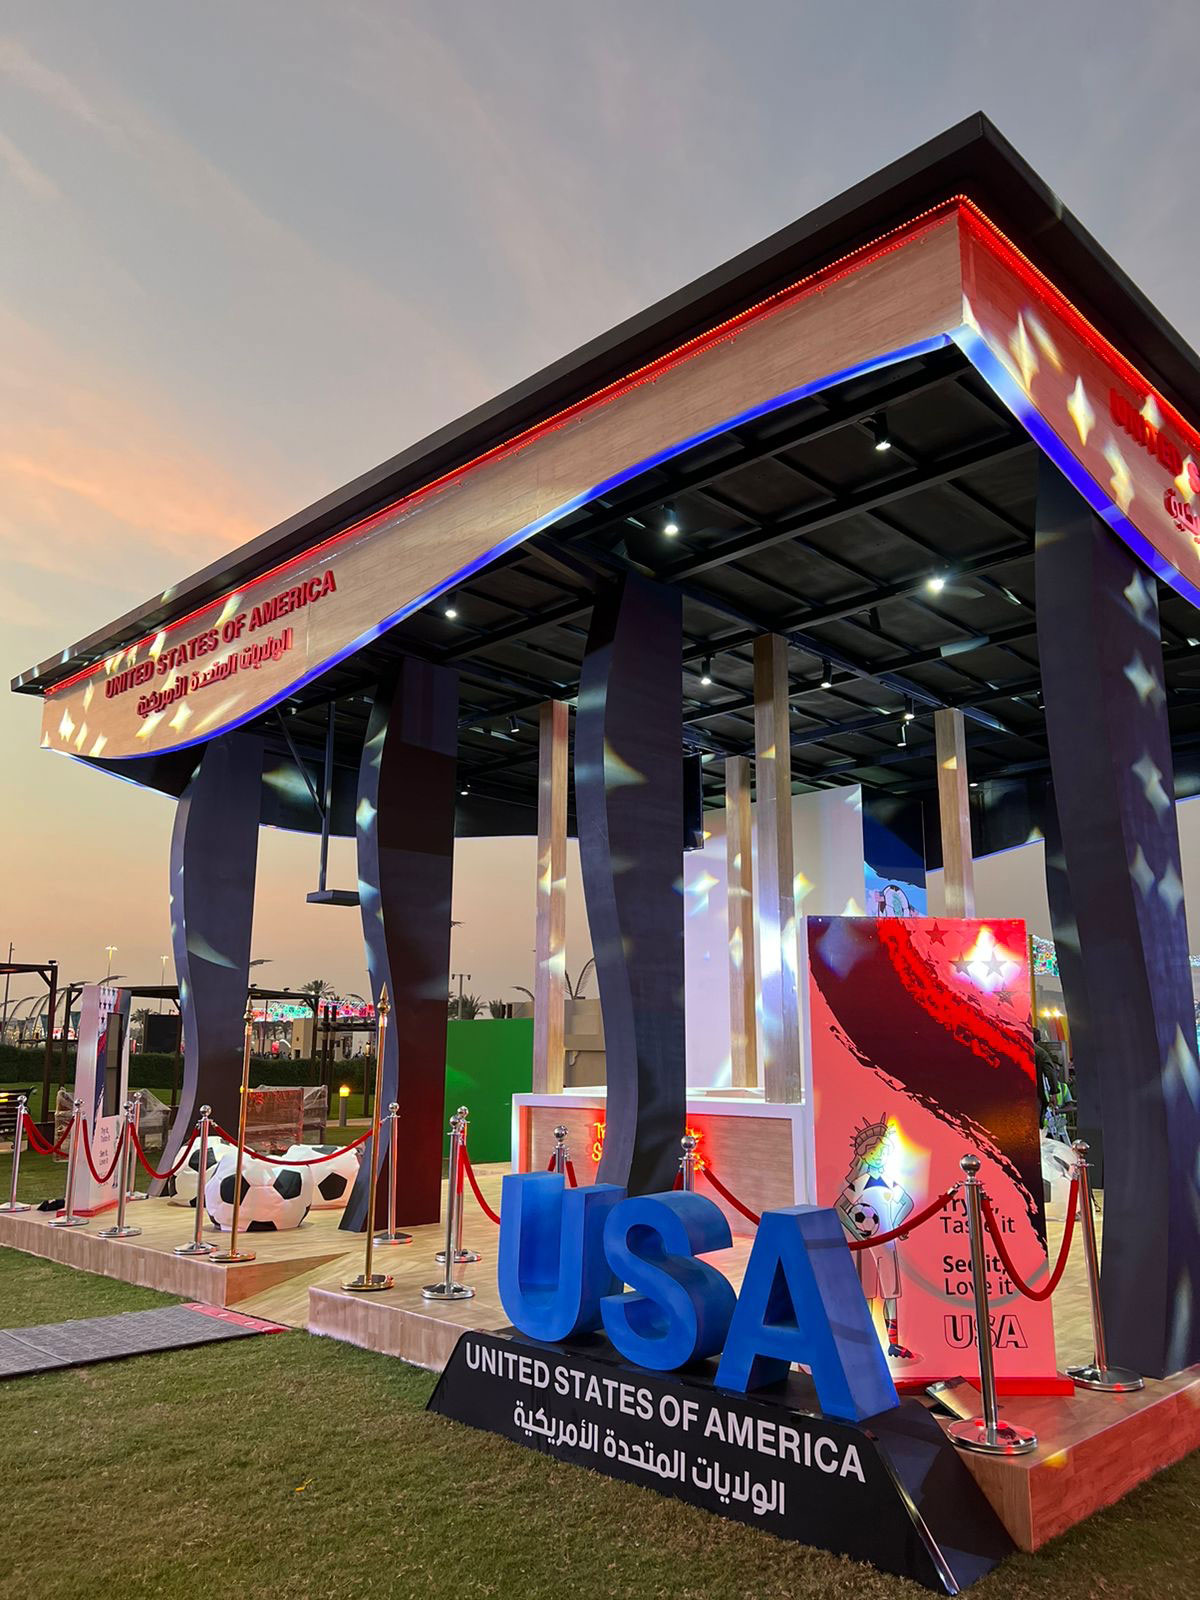 The 2022 World Cup USA Pavilion in Doha, Qatar